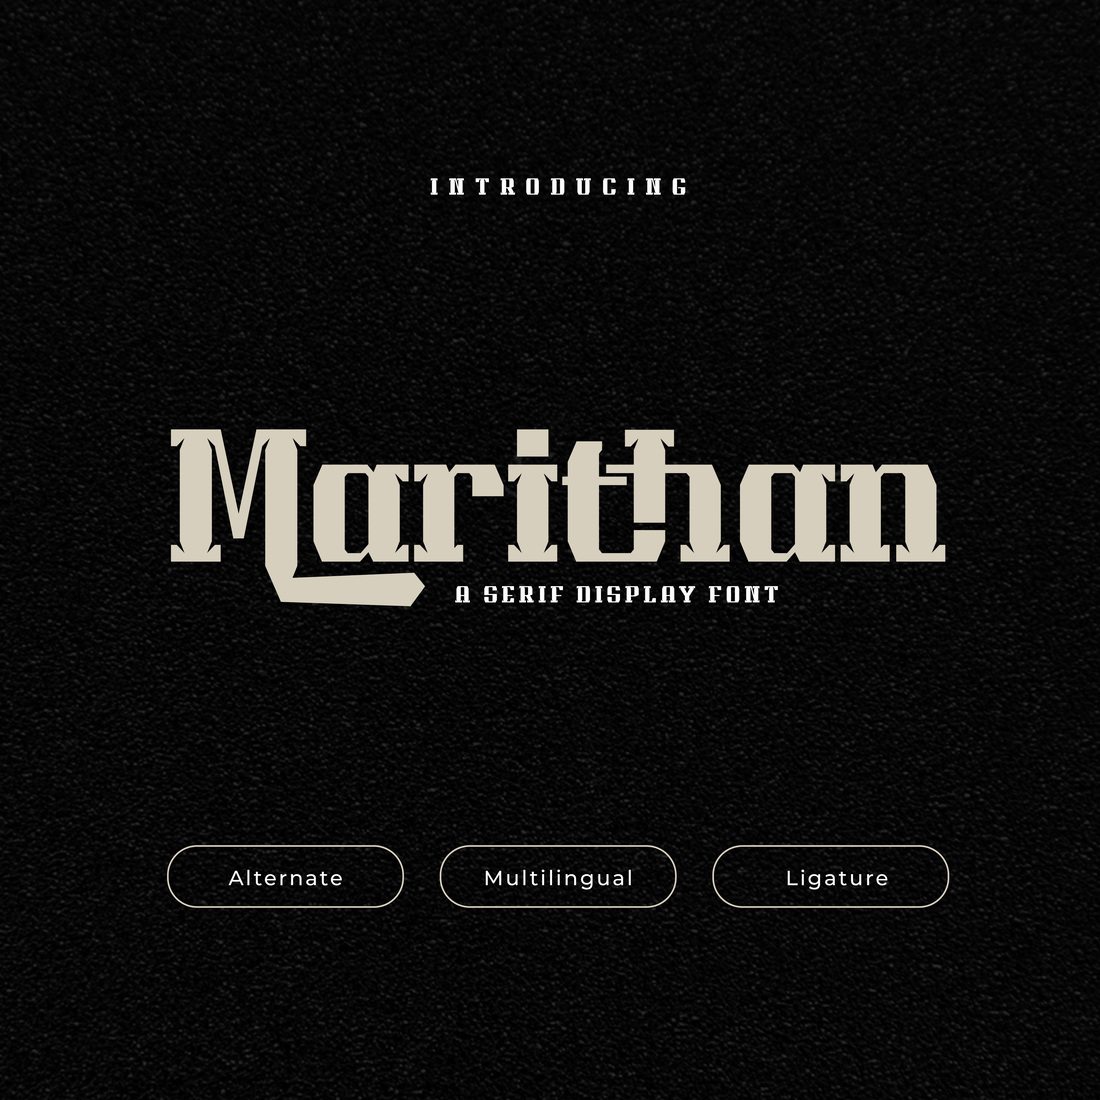 Marithan | Display Hero Font cover image.